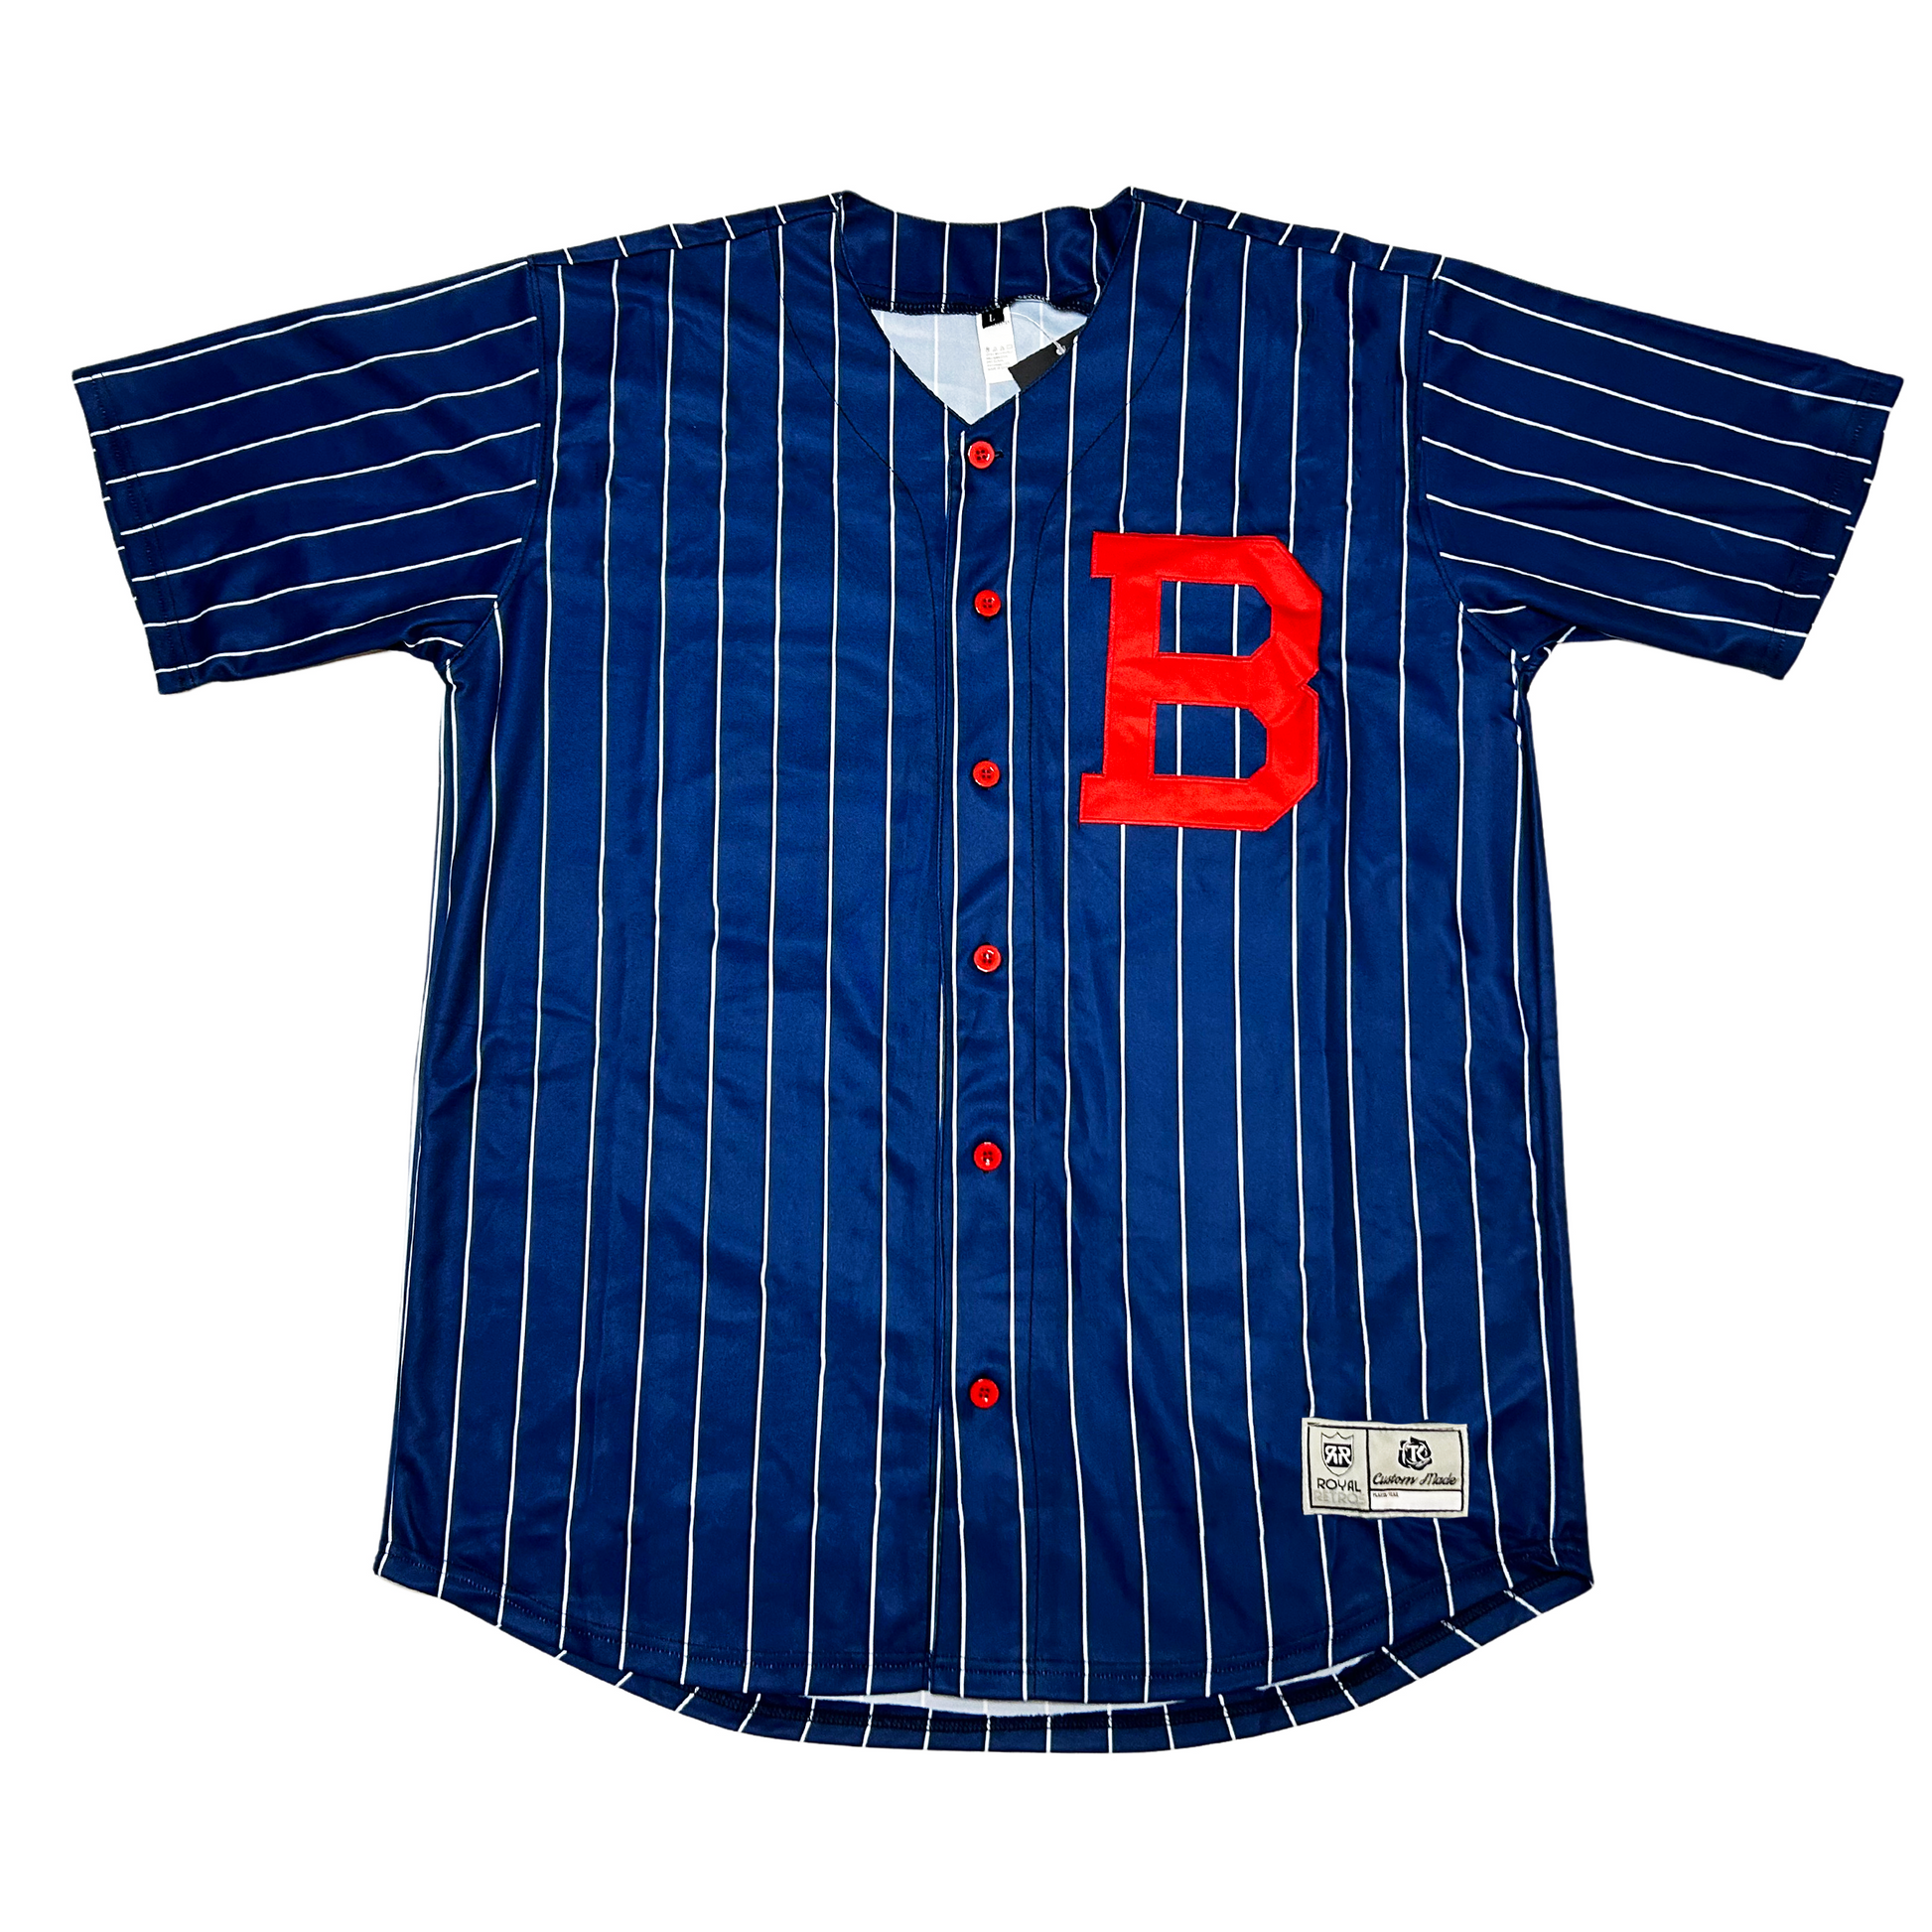 Boston Braves Vintage Apparel & Jerseys